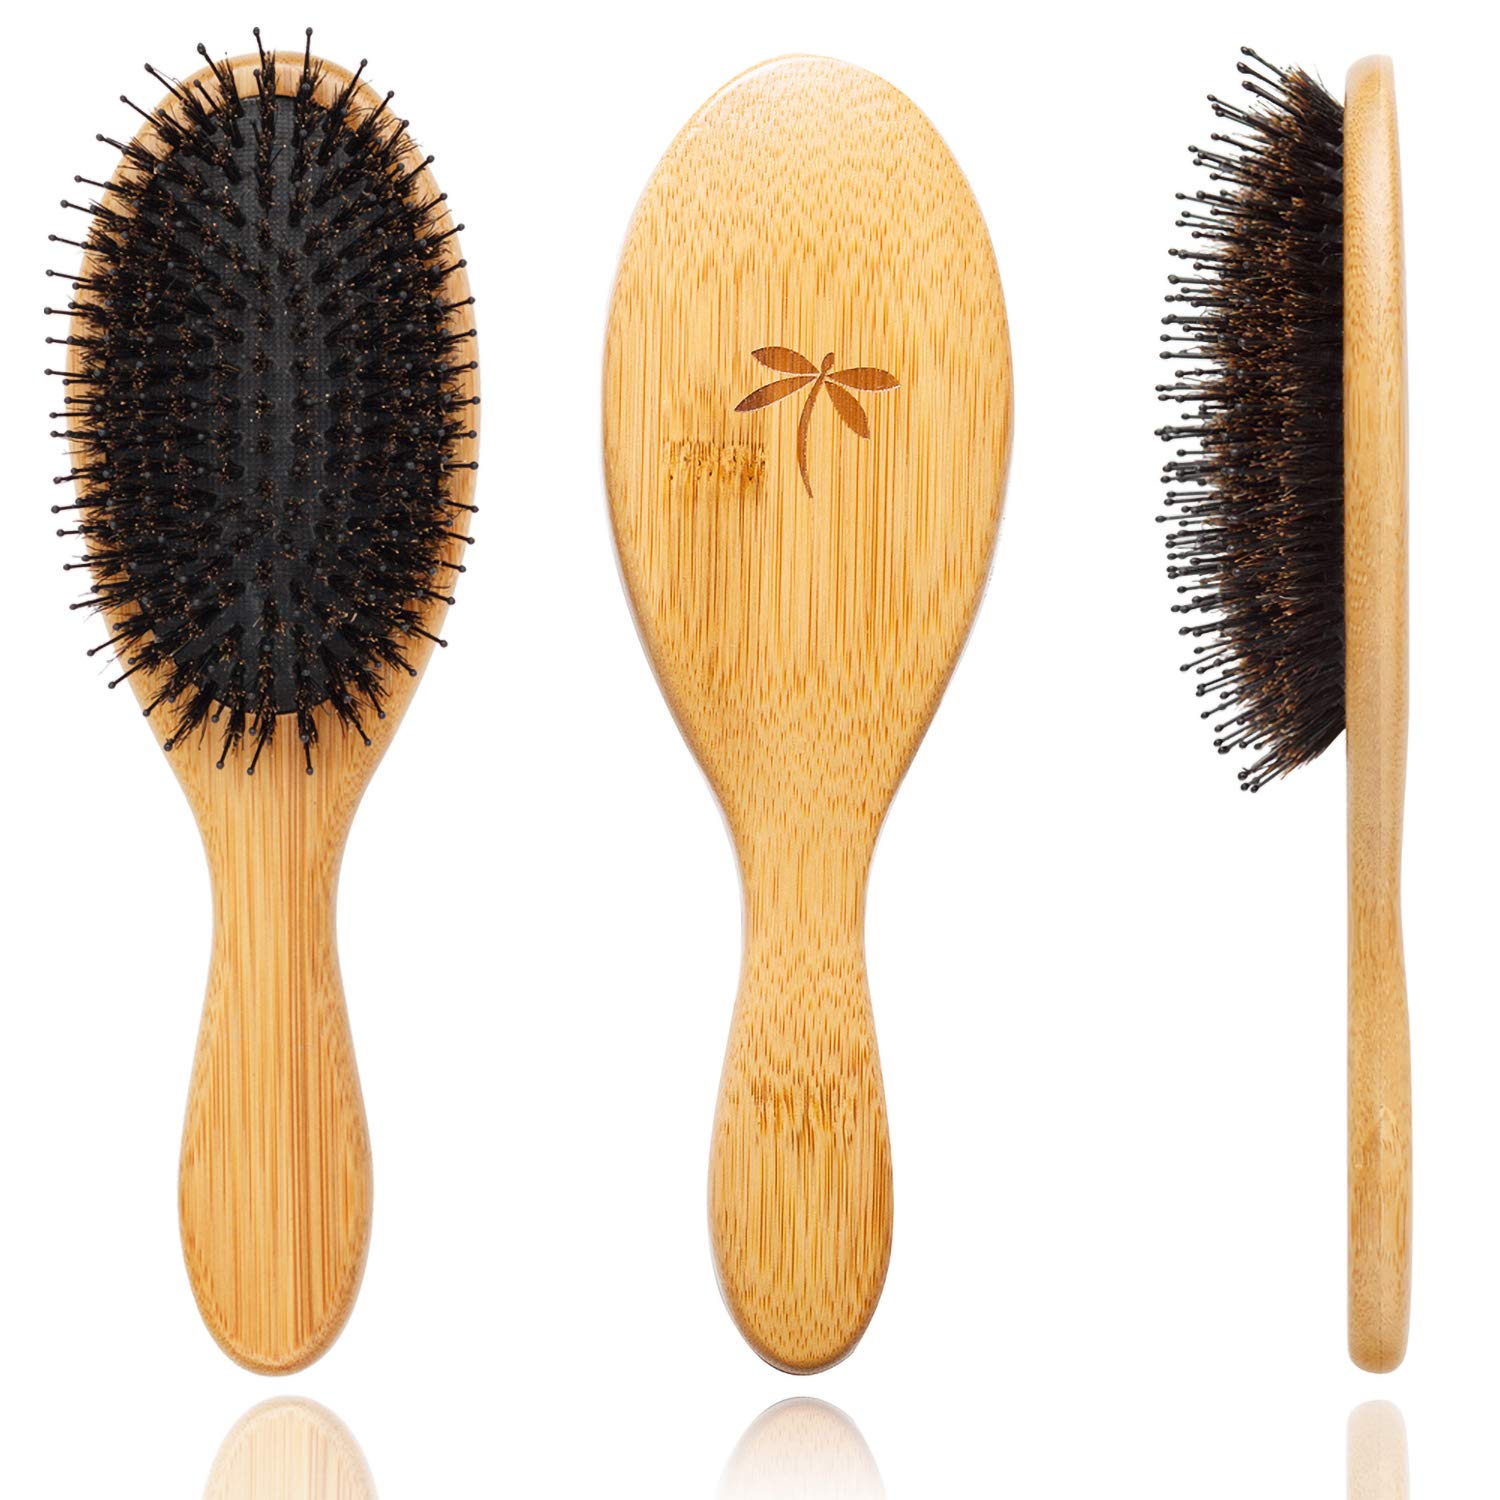 Belula Boar Bristle Hair Brush - Hair Brushes for [...]